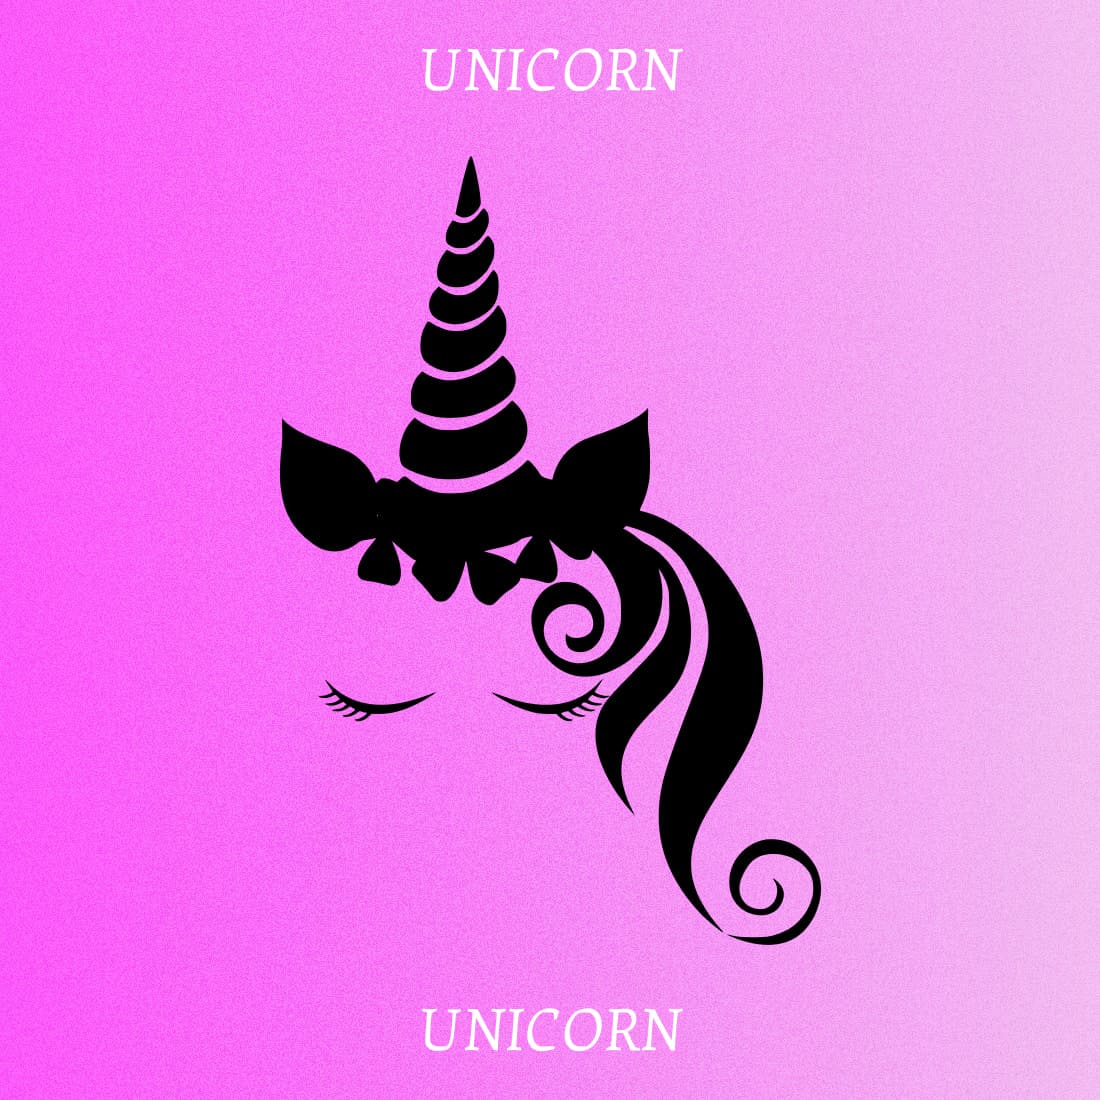 Unicorn - Pink Colorful Image.